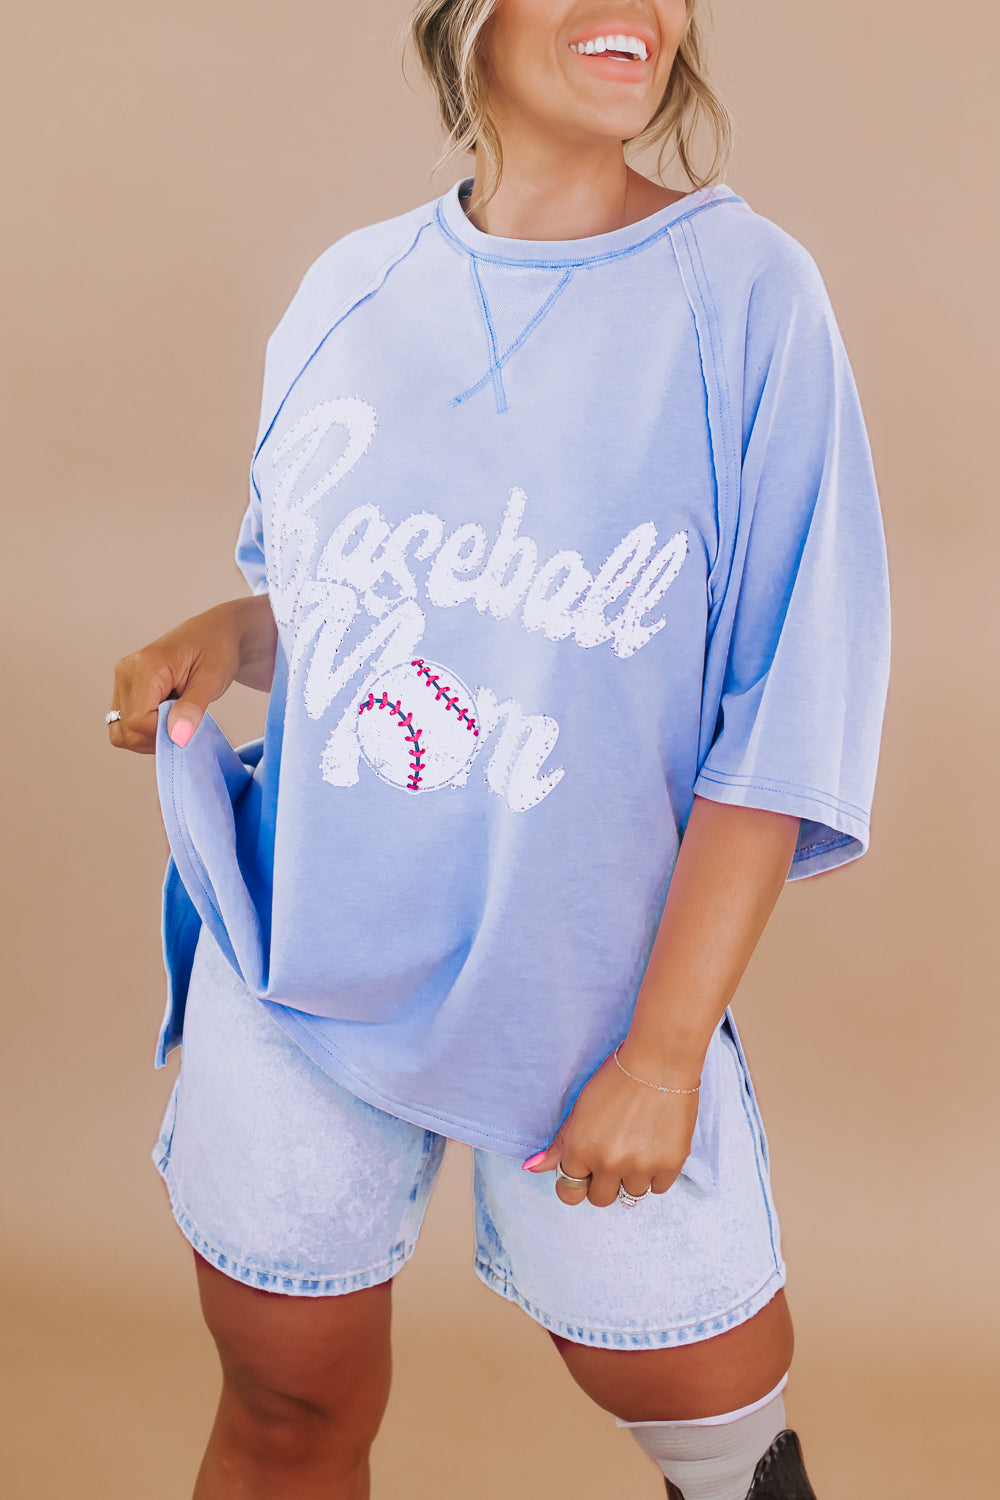 Baseball Mom Oversized Rhinestone Tee, Blue